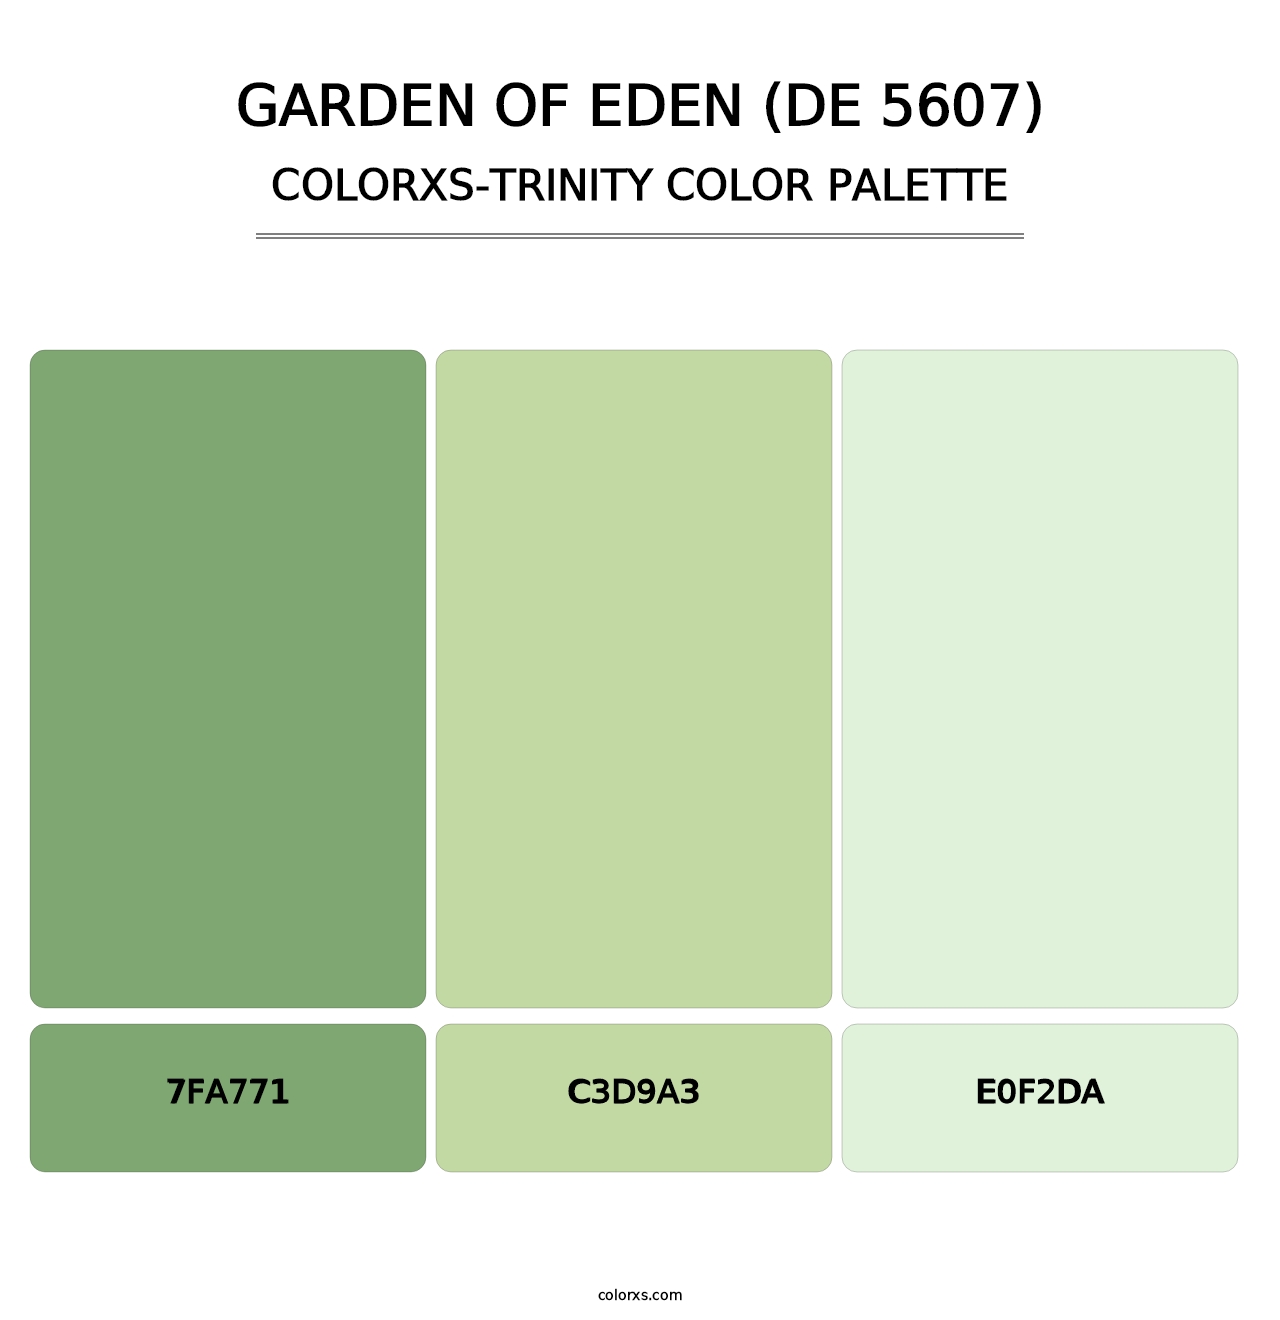 Garden of Eden (DE 5607) - Colorxs Trinity Palette